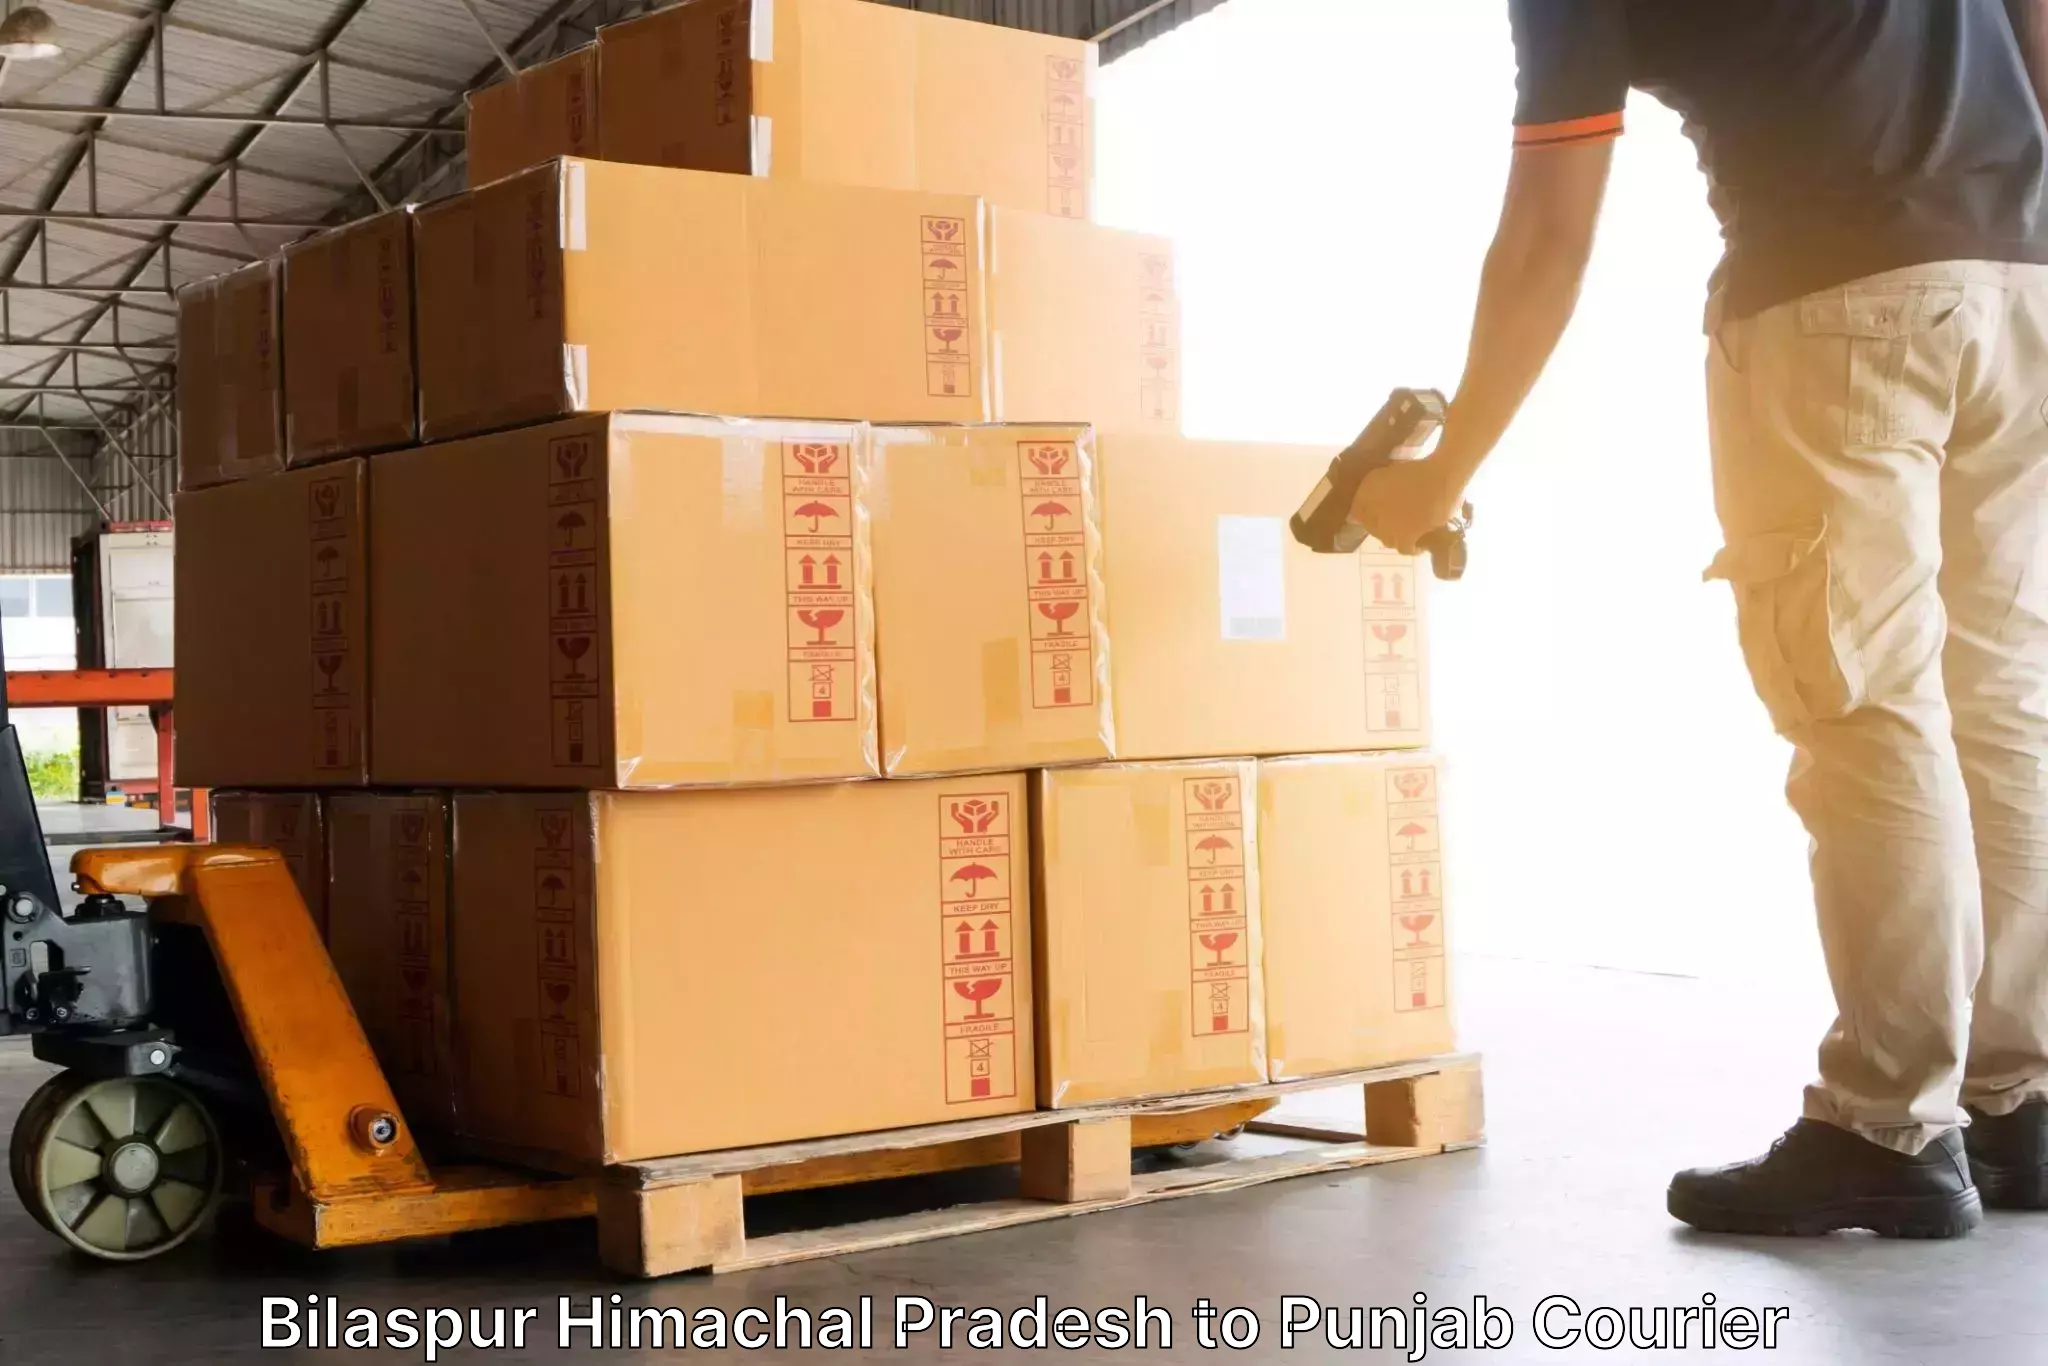 Delivery service partnership in Bilaspur Himachal Pradesh to Goindwal Sahib